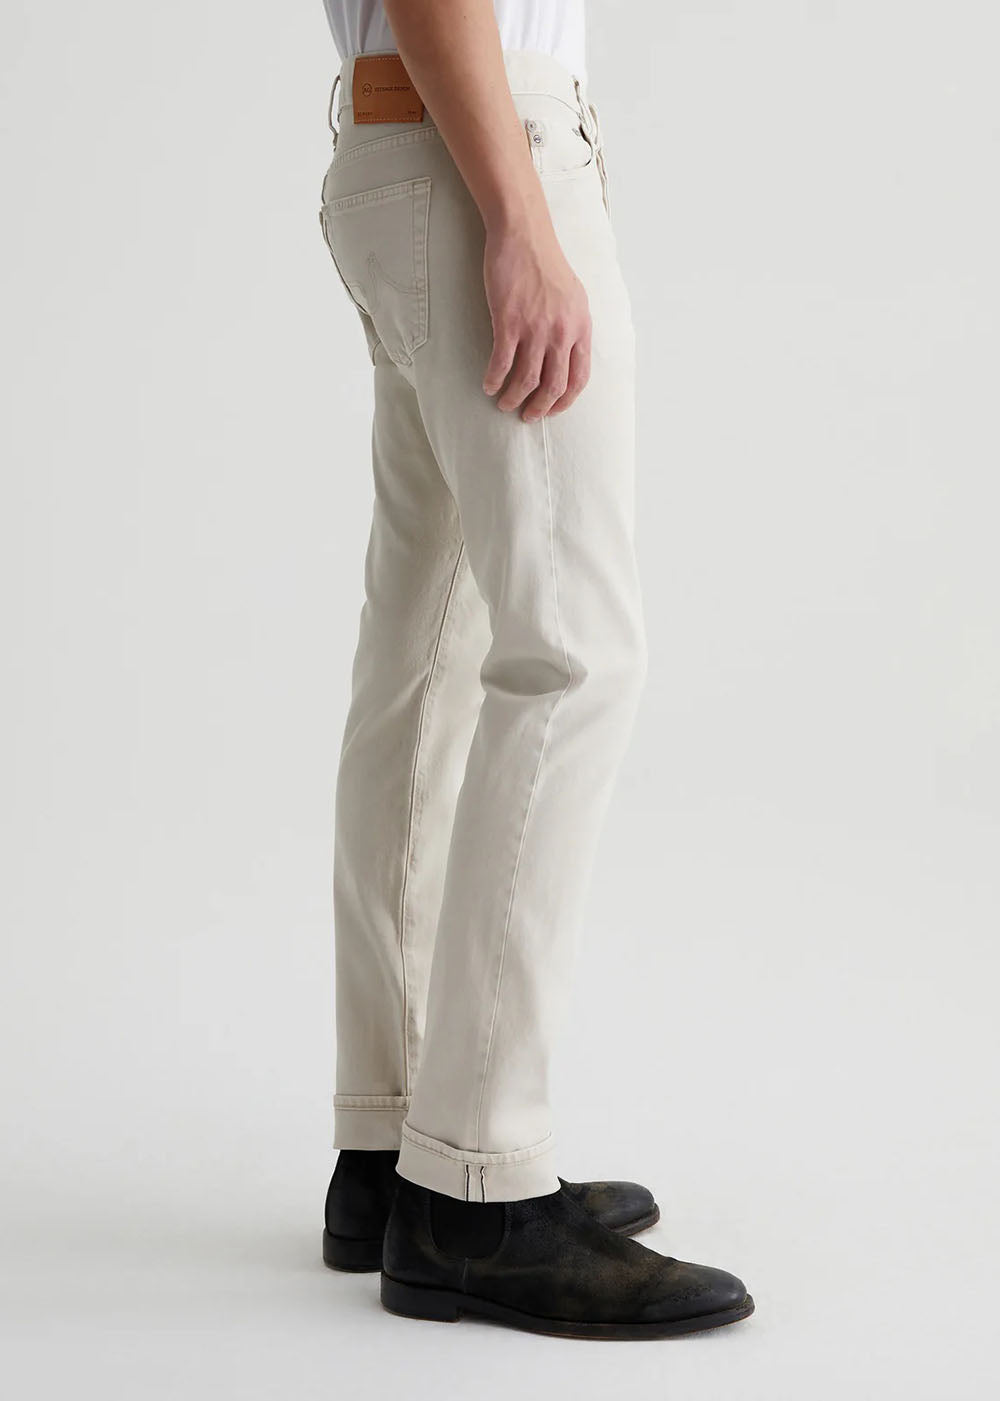 Tellis Modern Slim Jean - Sulfur Sienna Sand - AG Jeans Canada - Danali - 1783SSPSLSSSD